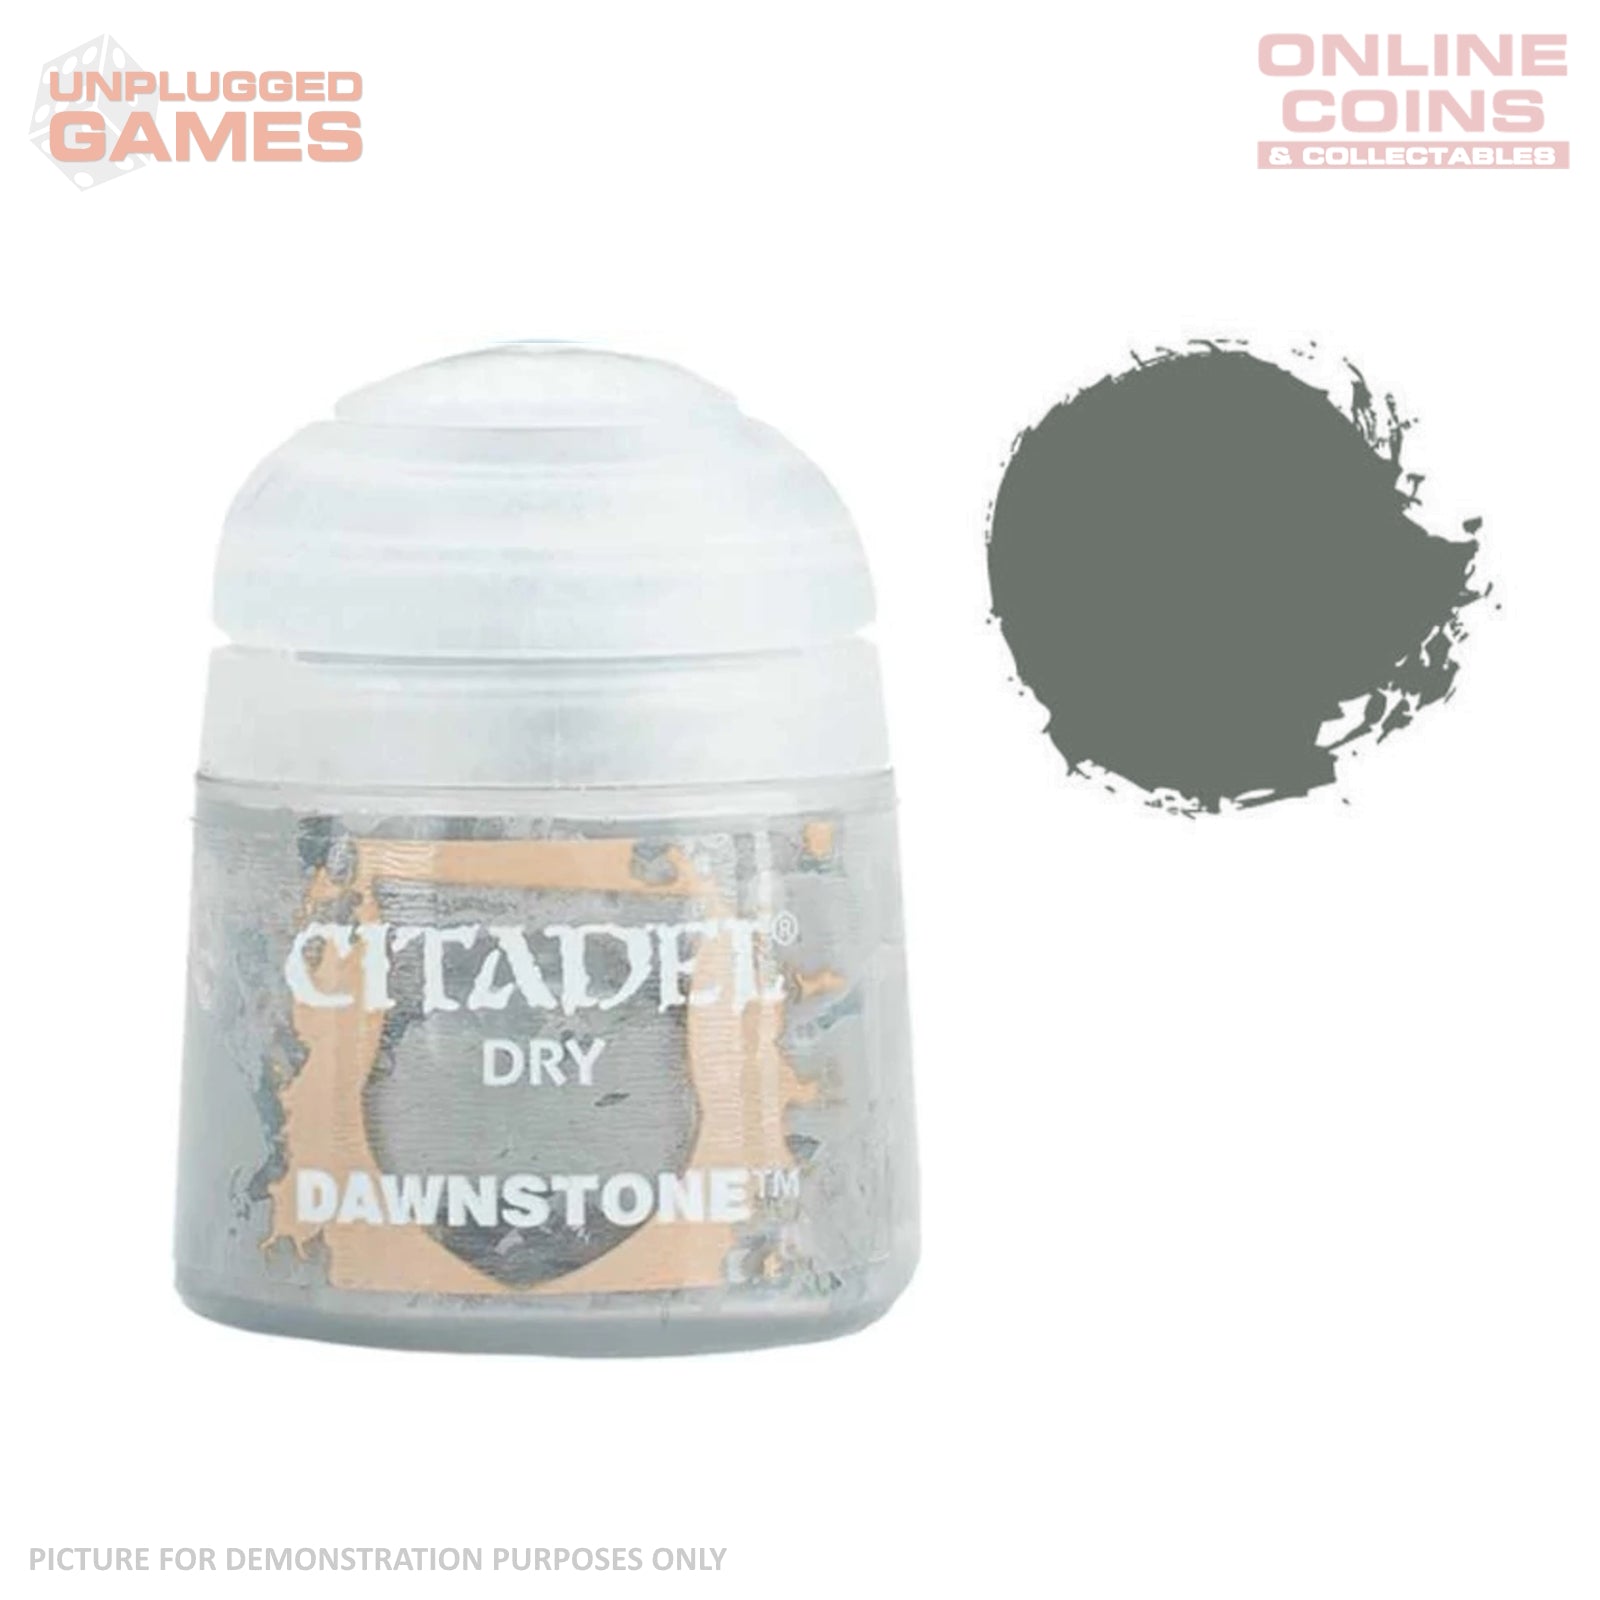 Citadel Dry - 23-29 Dawnstone